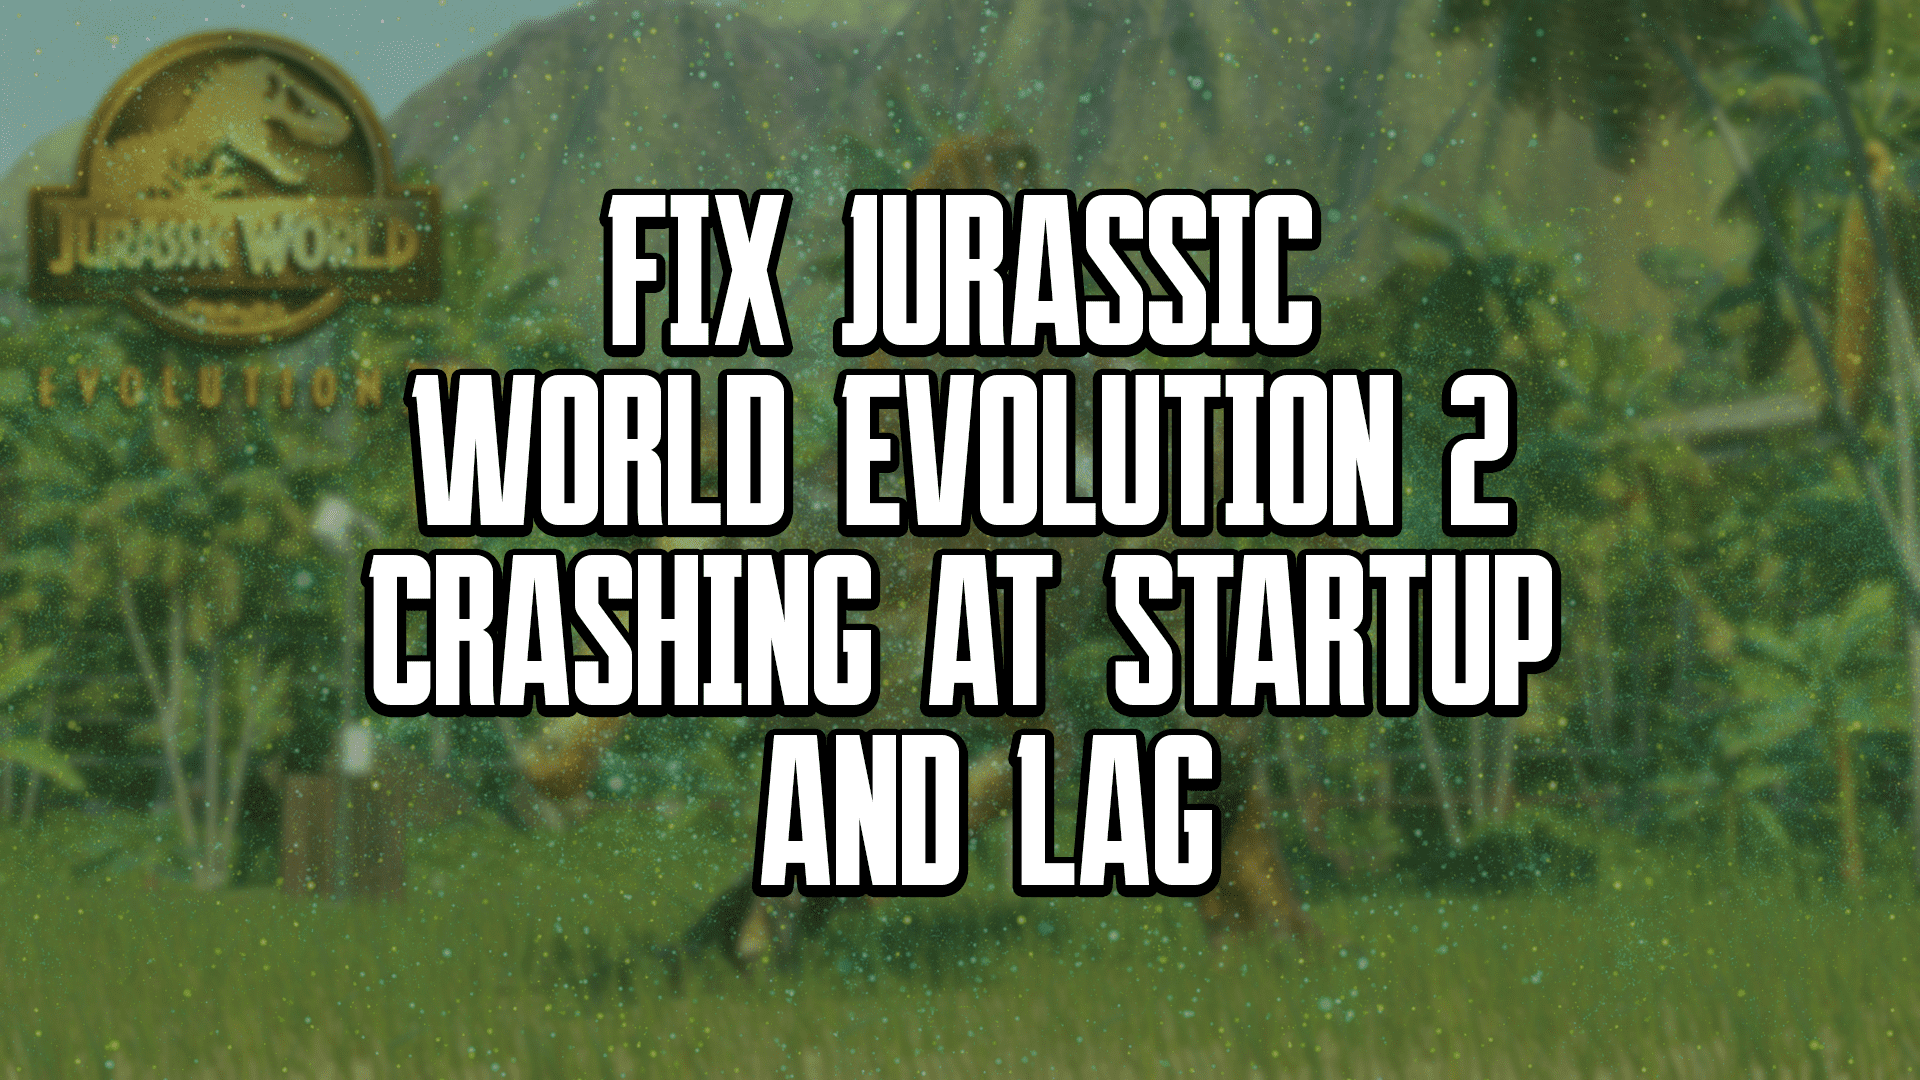 How to Fix Jurassic World Evolution 2 Crashing at Startup and Lag